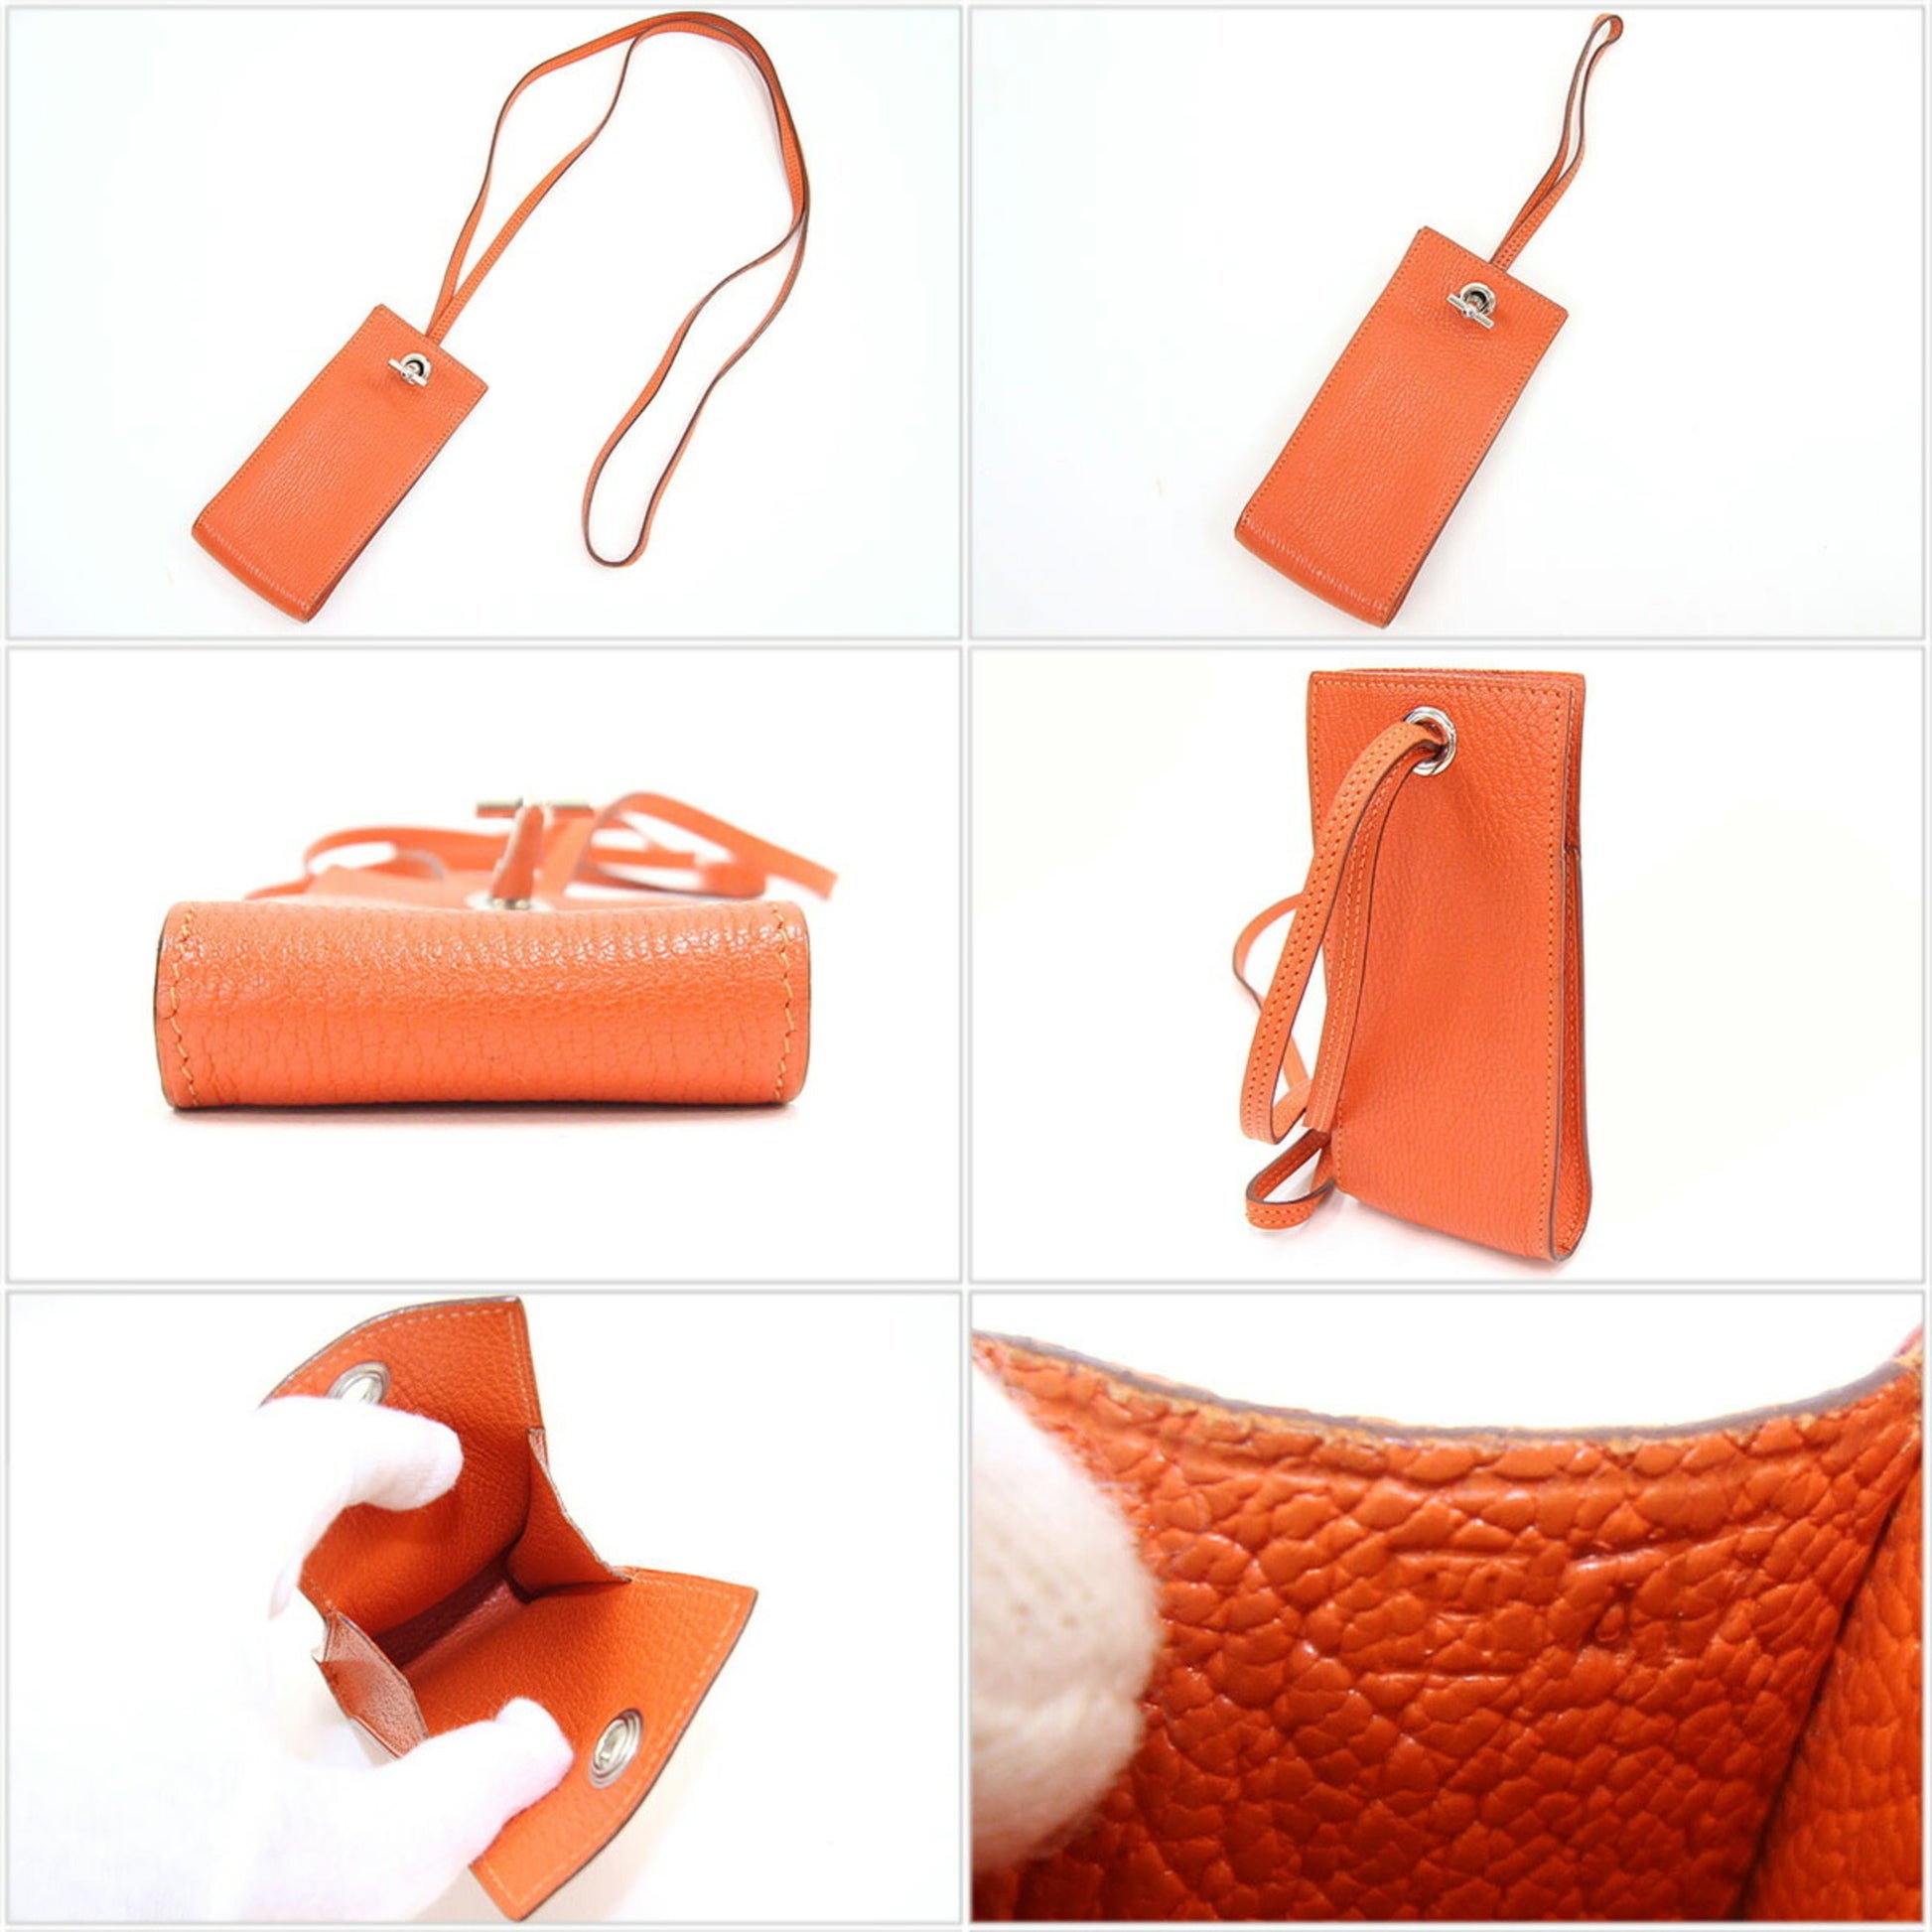 Hermès - Red/orange Vespa bag